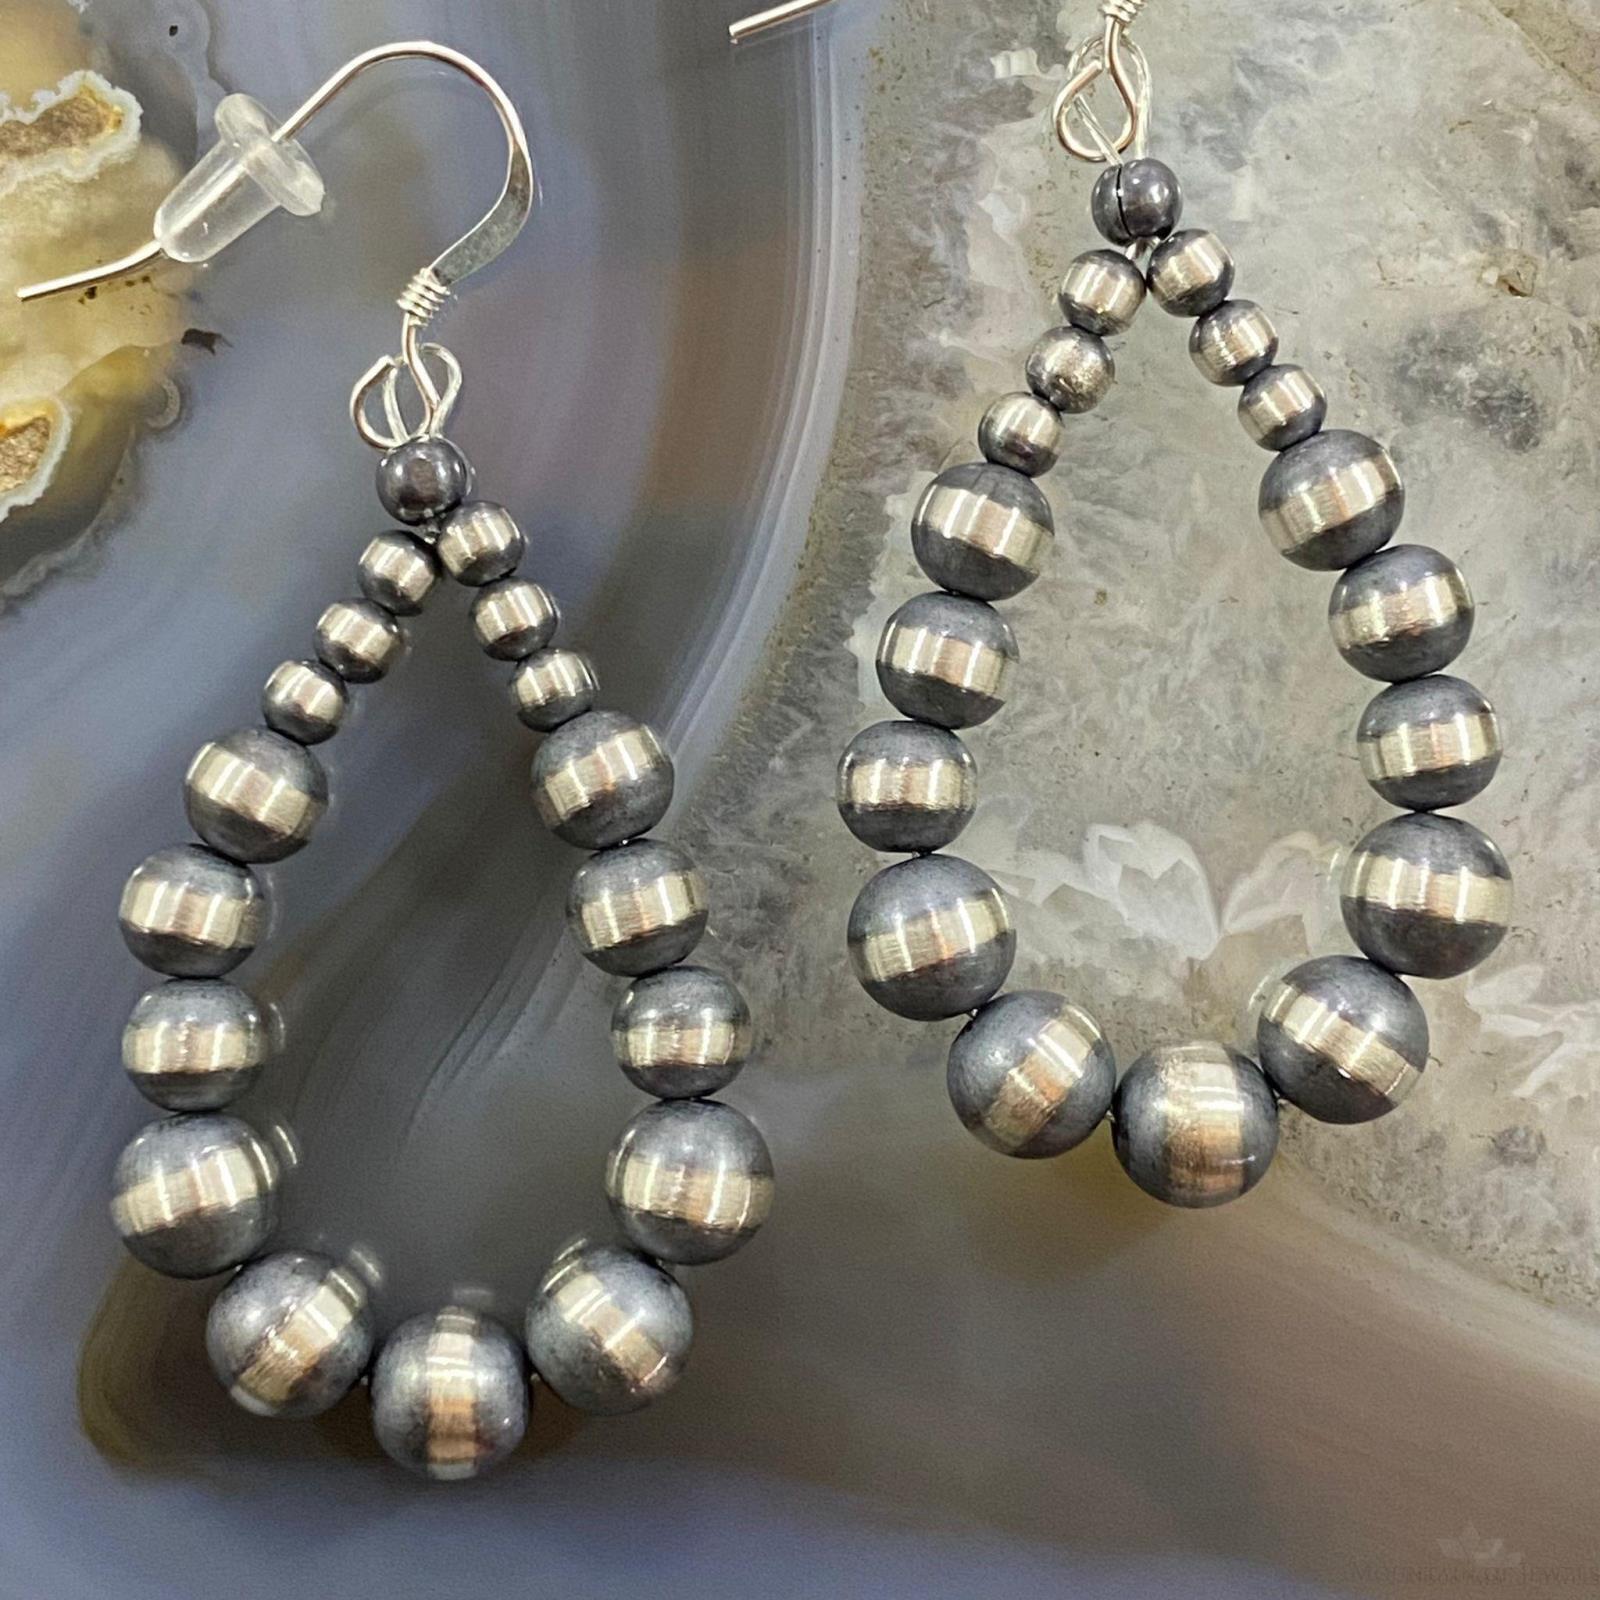 Navajo Pearl Beads Graduated 3-6mm Sterling Silver Hoop Dangle Earrings - Mountain of Jewels